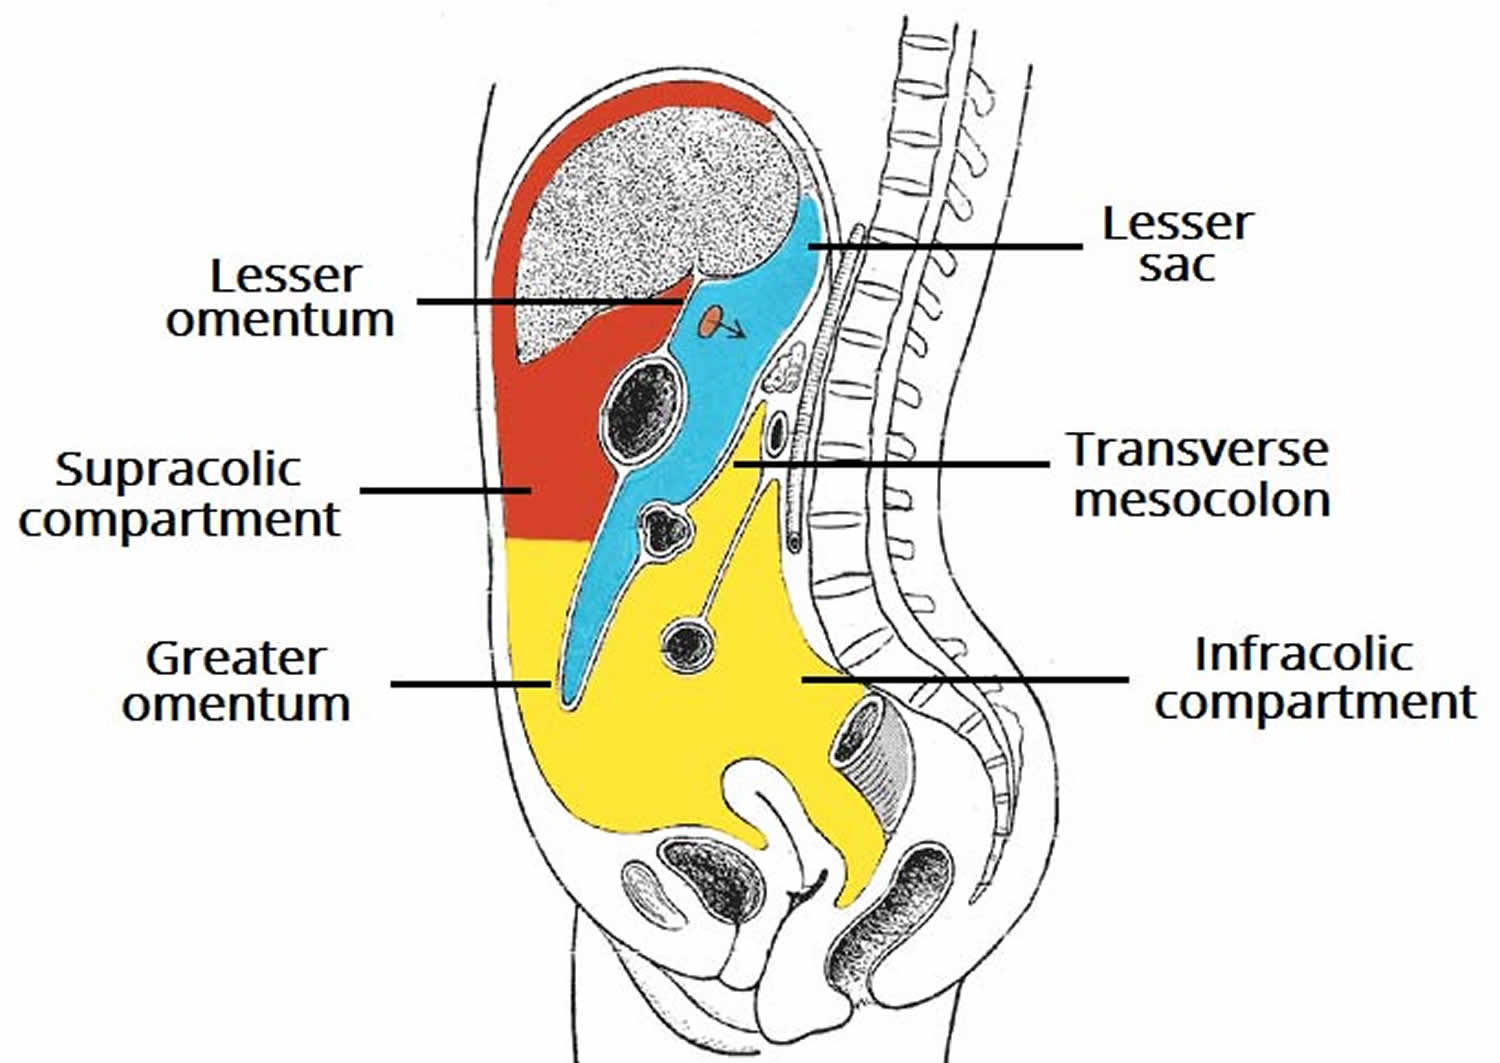 hemoperitoneum-causes-signs-symptoms-diagnosis-treatment-prognosis